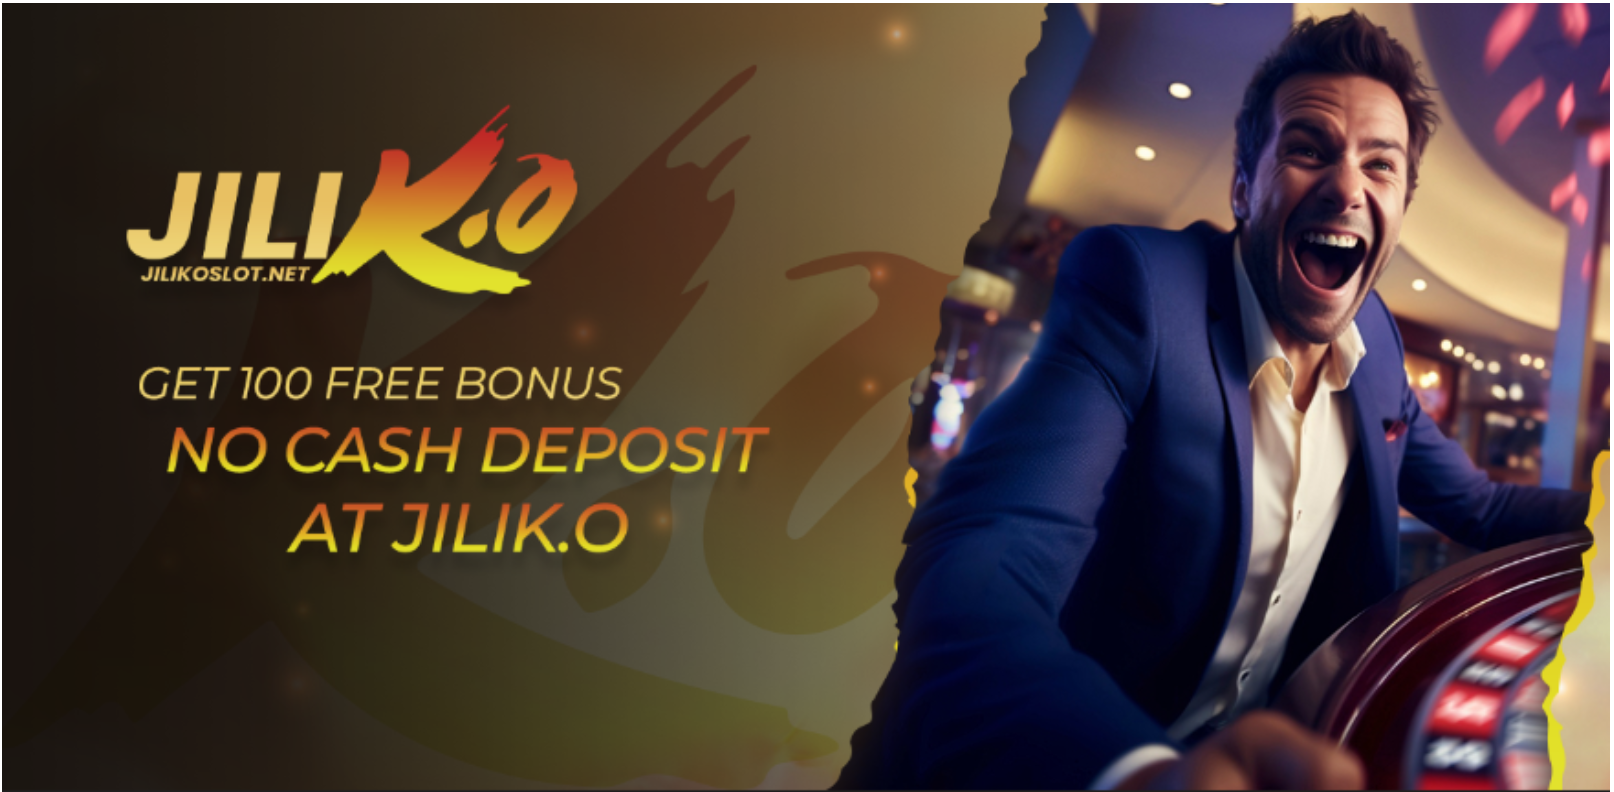 Jiliko - 100 free bonus casino no deposit